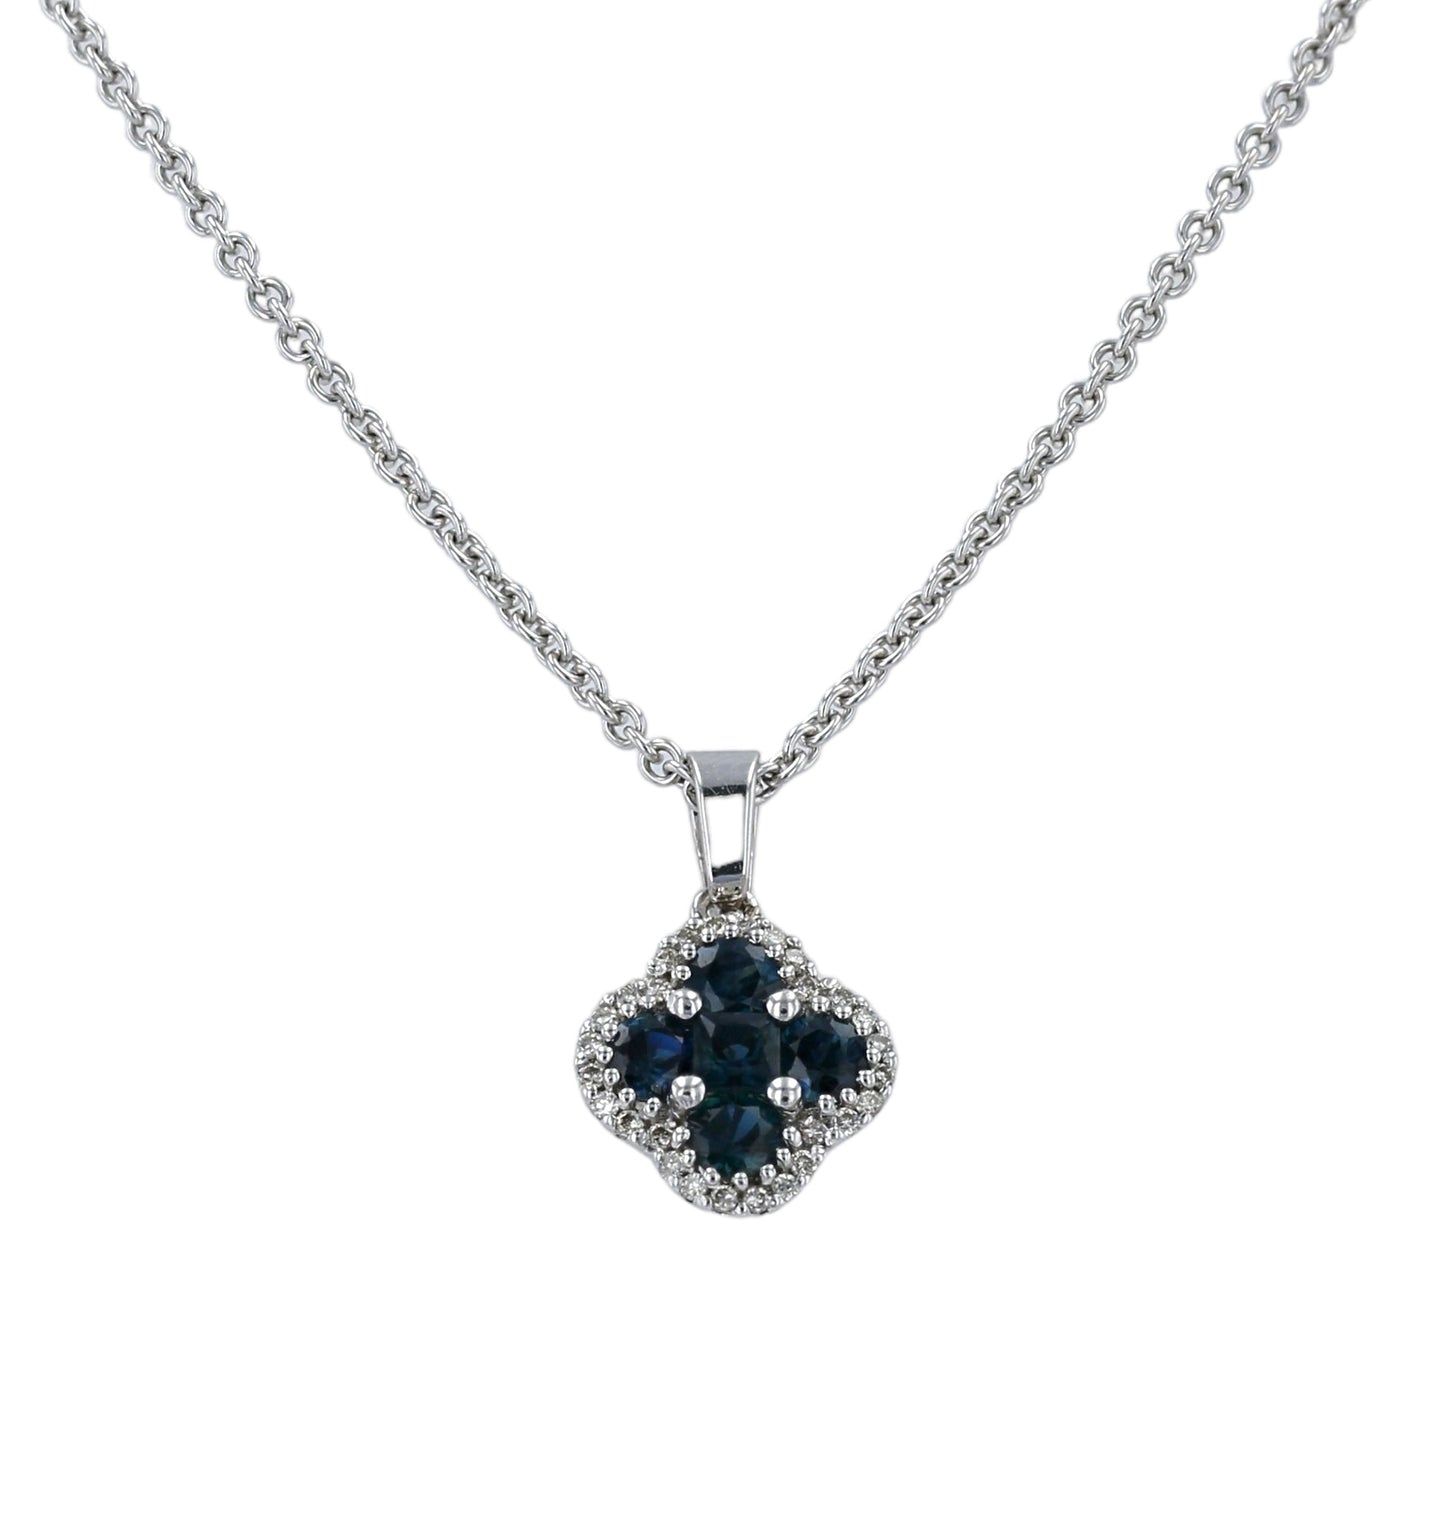 White 18k necklace pendant clover and earrings 14k blue sapphire set